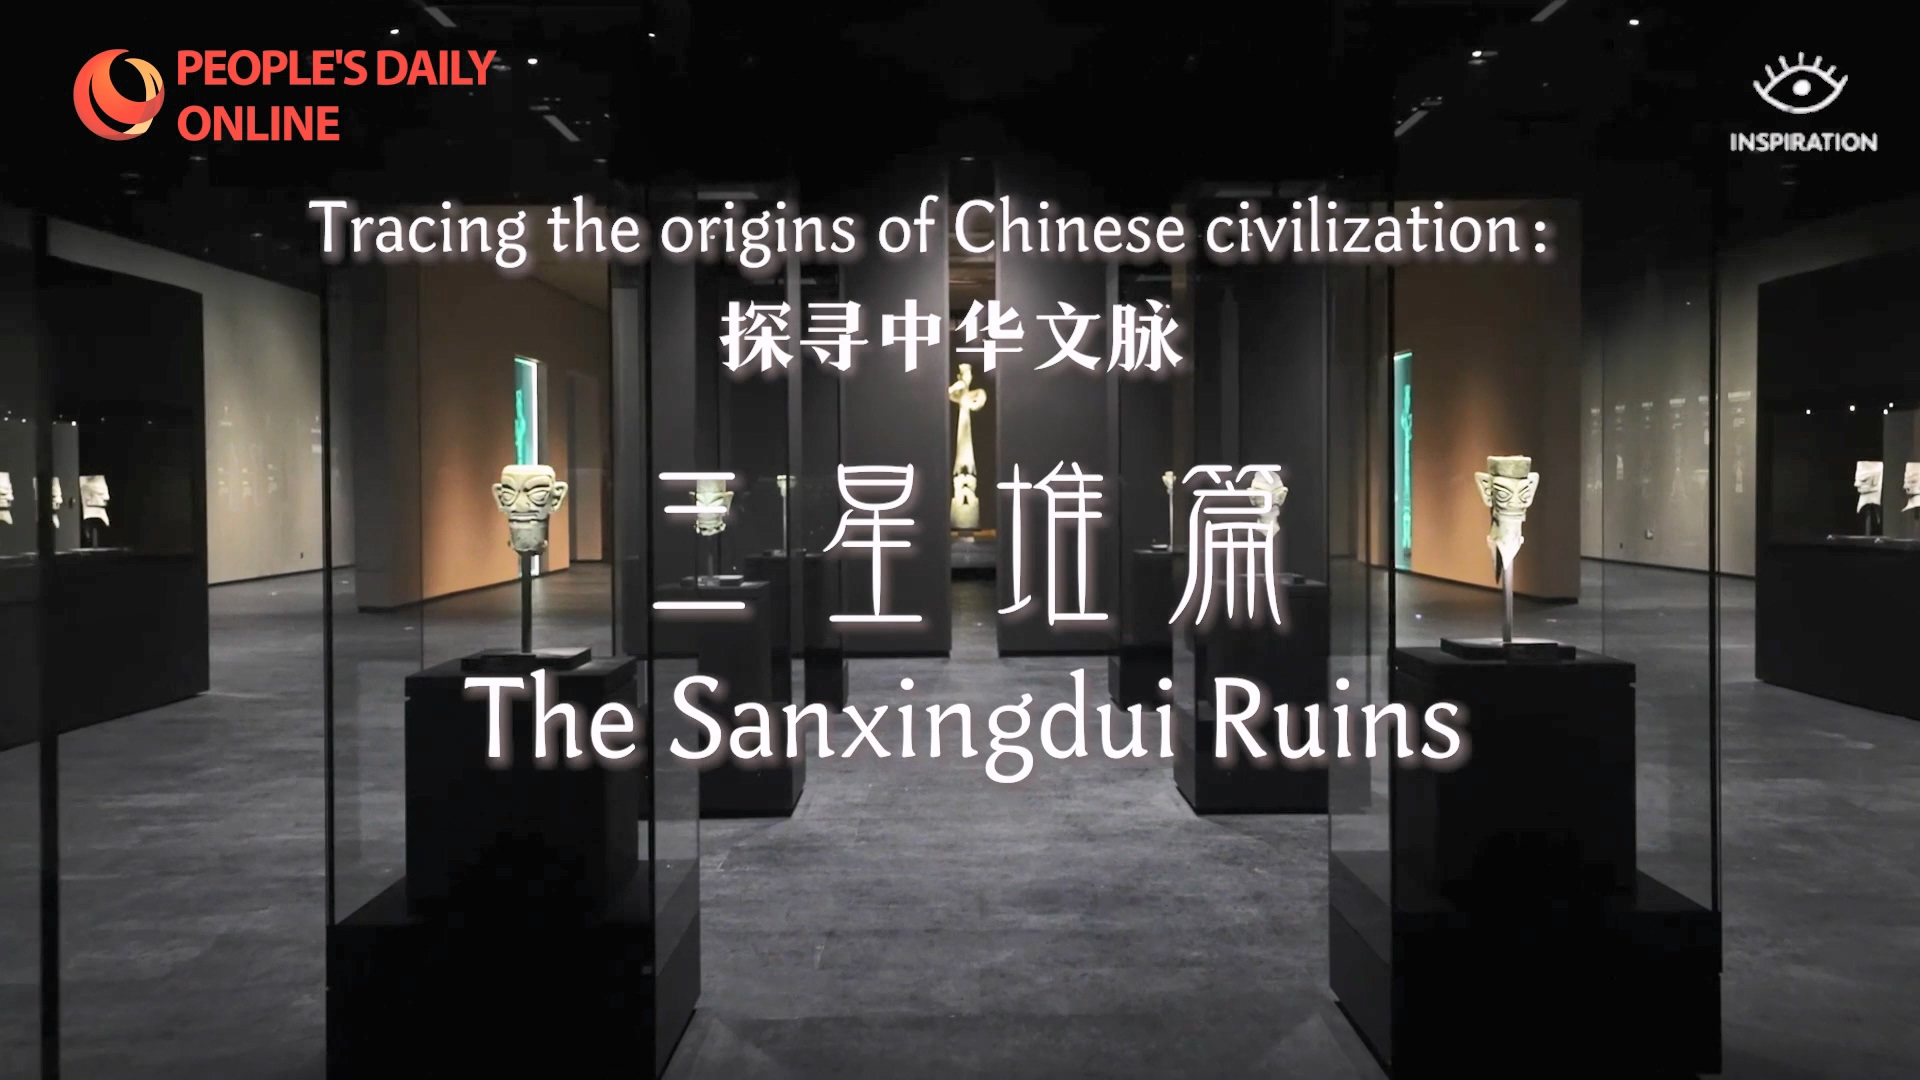 Encountering the splendor of the 4,000-year-old ancient Shu civilization at Sanxingdui